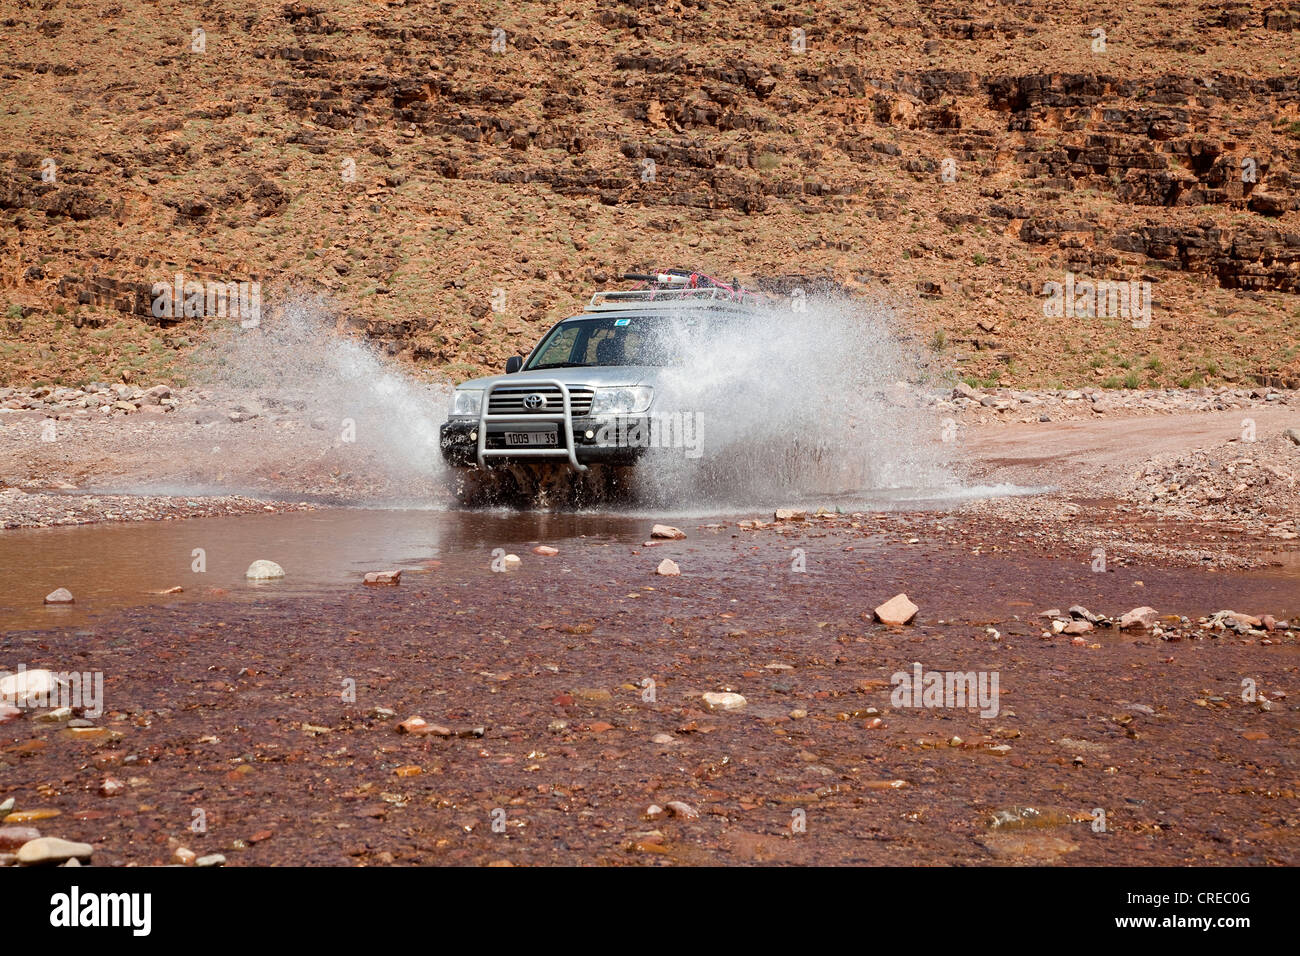 All-terrain vehicle, Toyota Land Cruiser, driving through a river bed near Foum-Zguid, Morocco, Africa Stock Photo